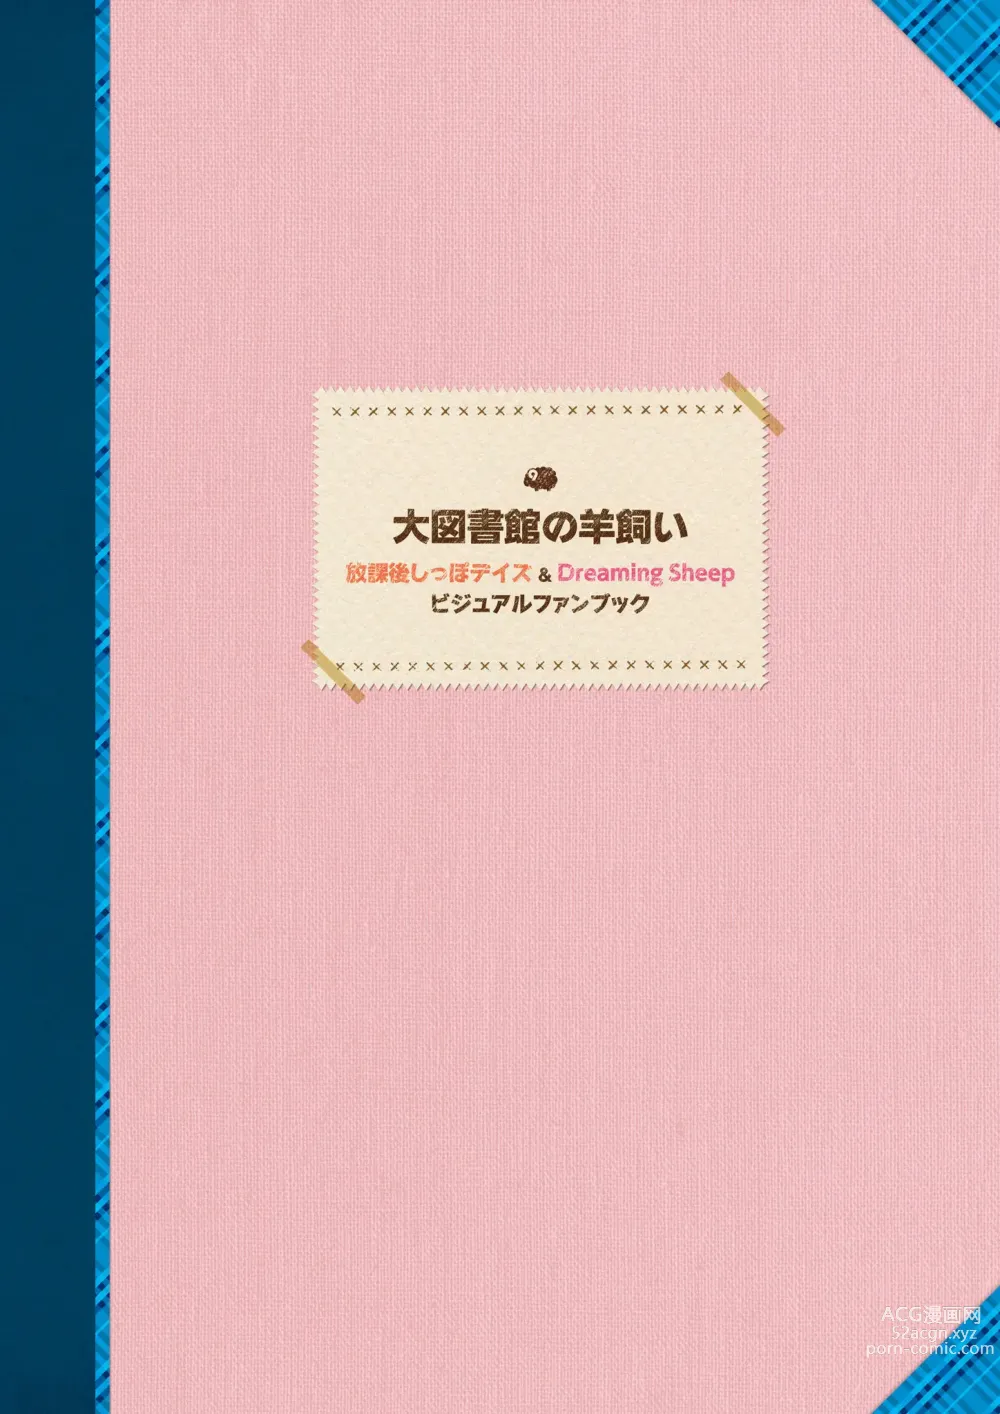 Page 5 of manga Daitoshokan no Hitsujikai Visual Fan Book Houkago Shippo Days & Dreaming Sheep Visual Fan Book